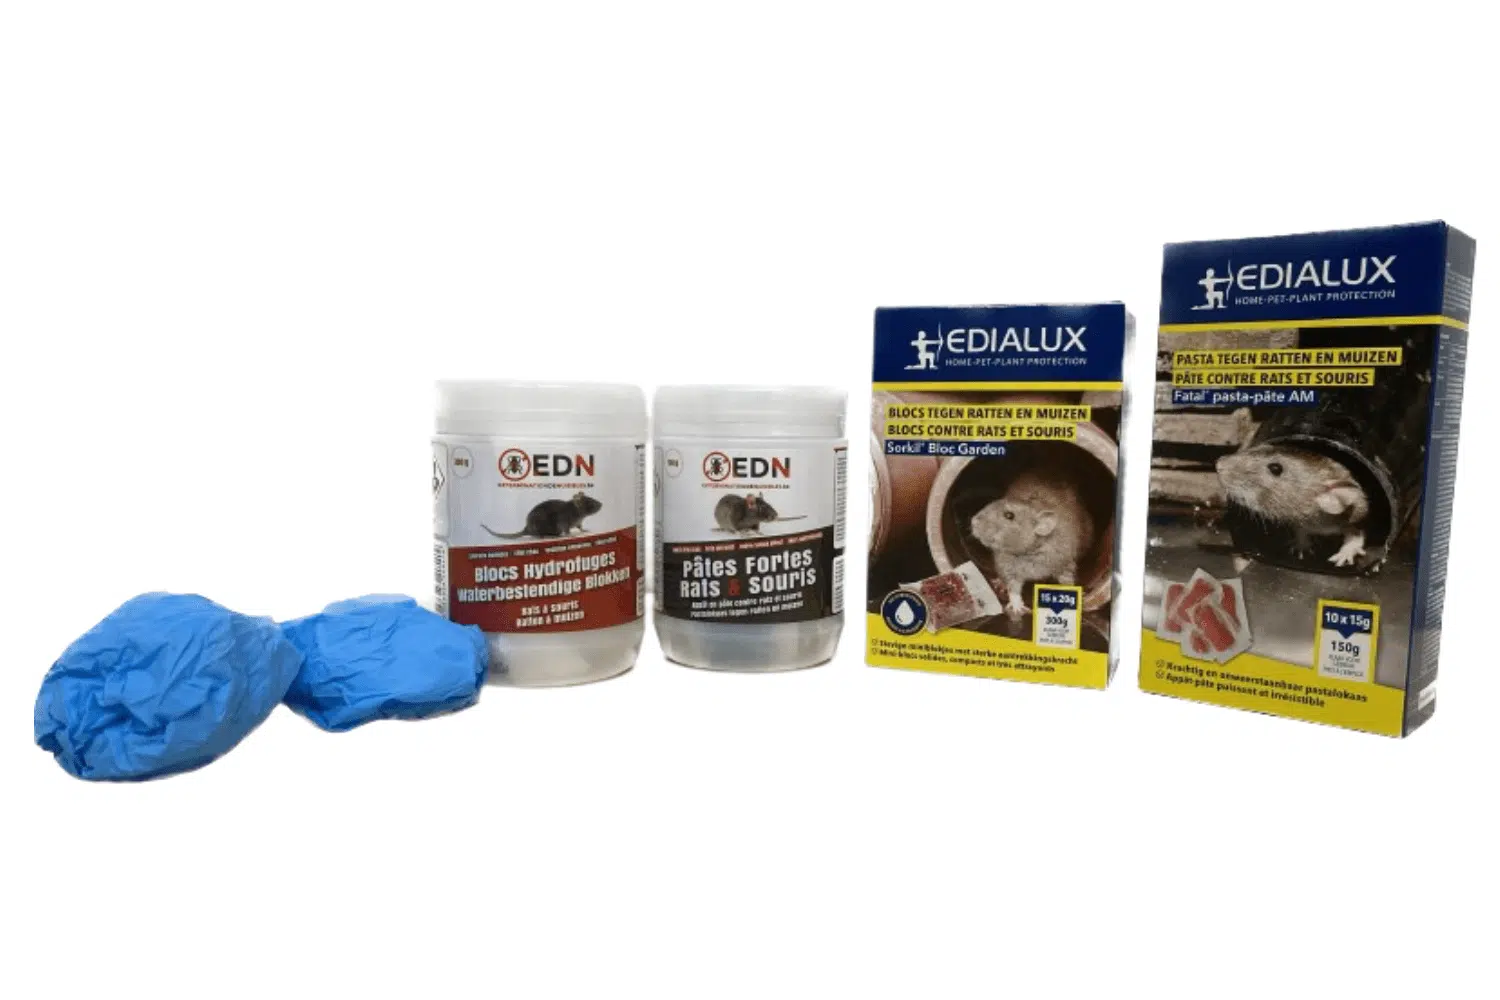 Kit de produits anti rats professionnels avec appats - Domumin